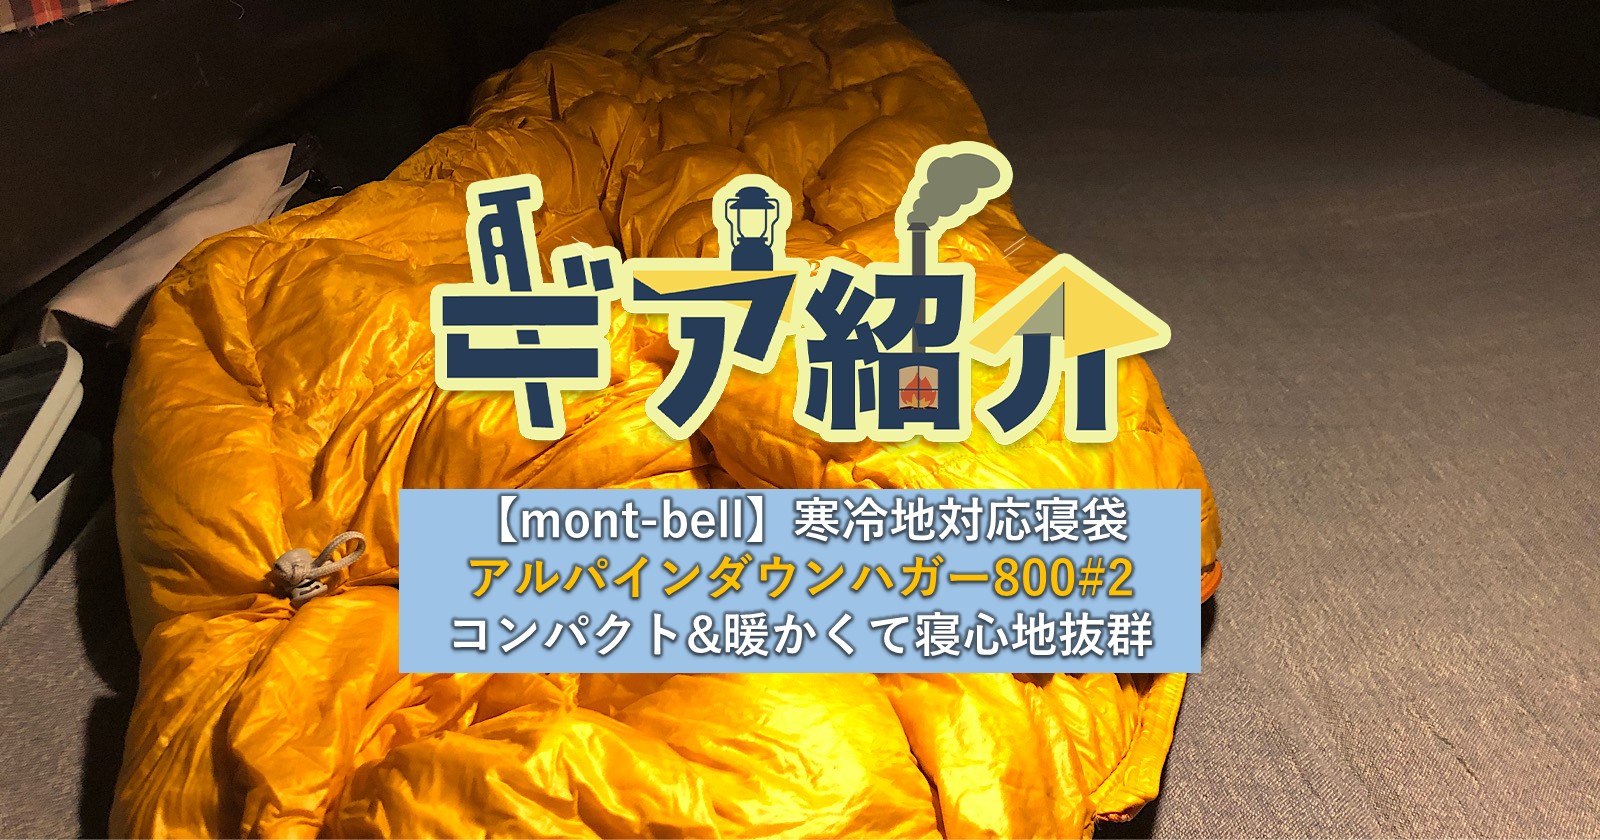 【mont-bell】寒冷地対応寝袋アルパインダウンハガー800#2は